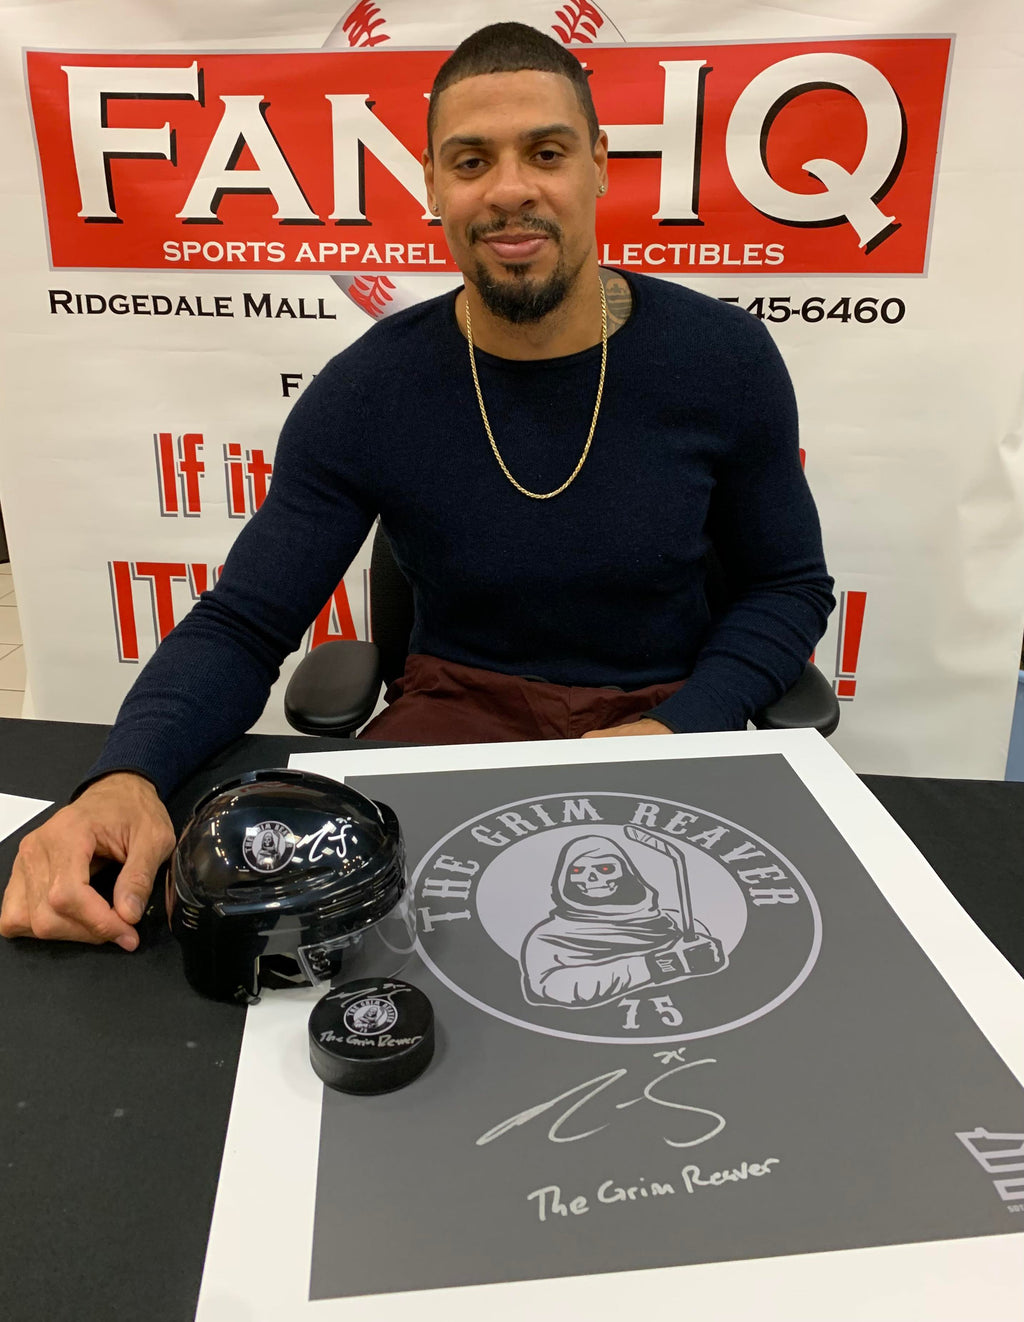 Jake Middleton Autographed Minnesota Wild Signature Puck – Fan HQ